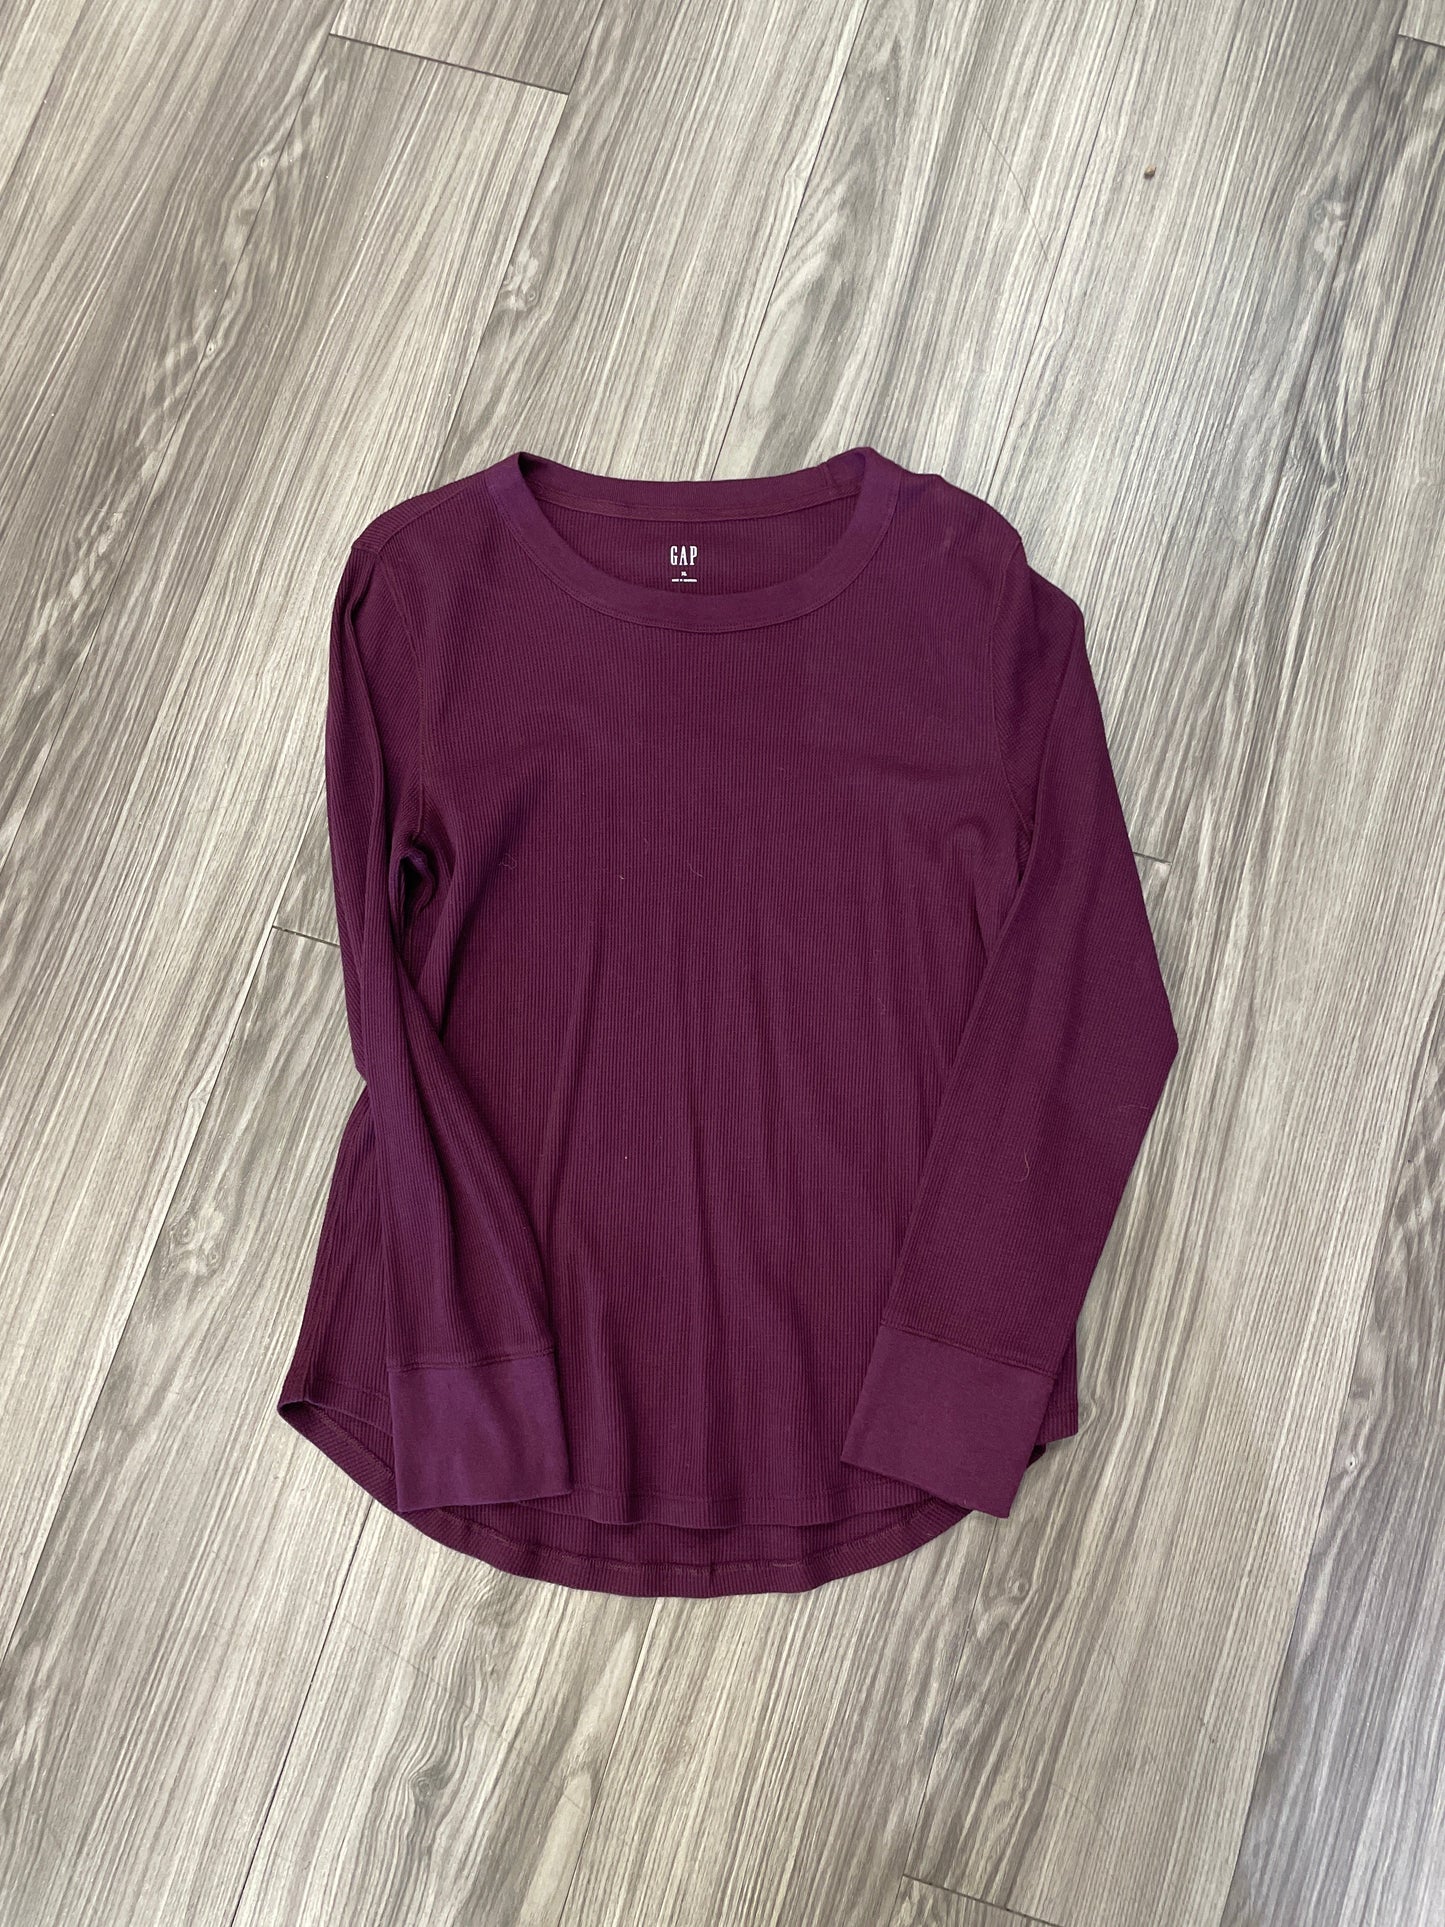 Purple Top Long Sleeve Gap, Size Xl